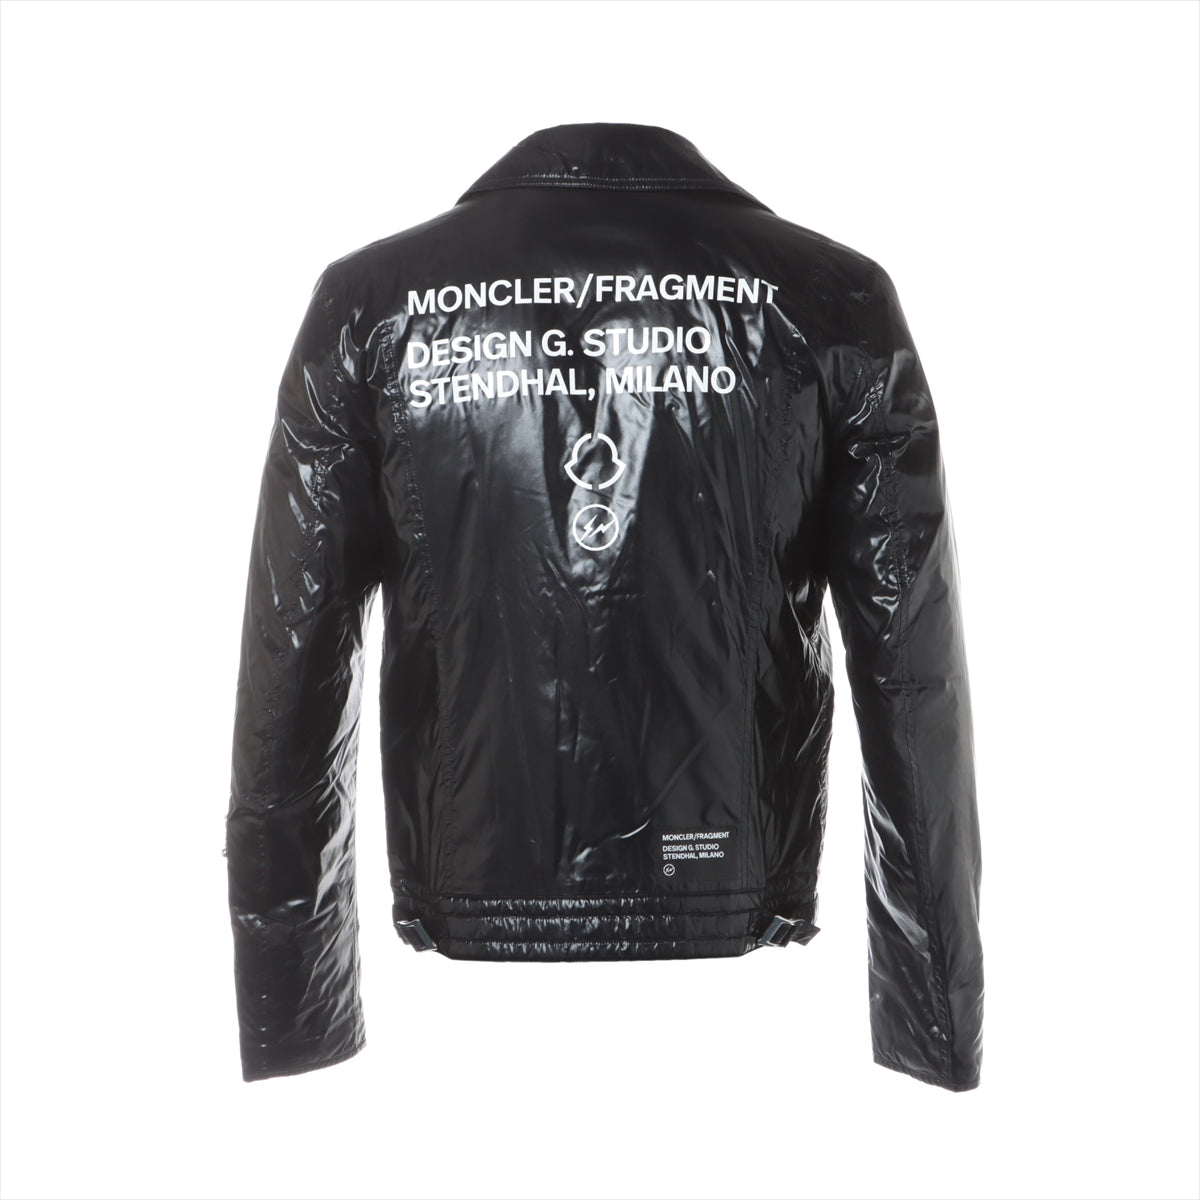 Moncler Genius Fragment x Louis leather 20 years Nylon Jacket 0 Men's Black  SERG